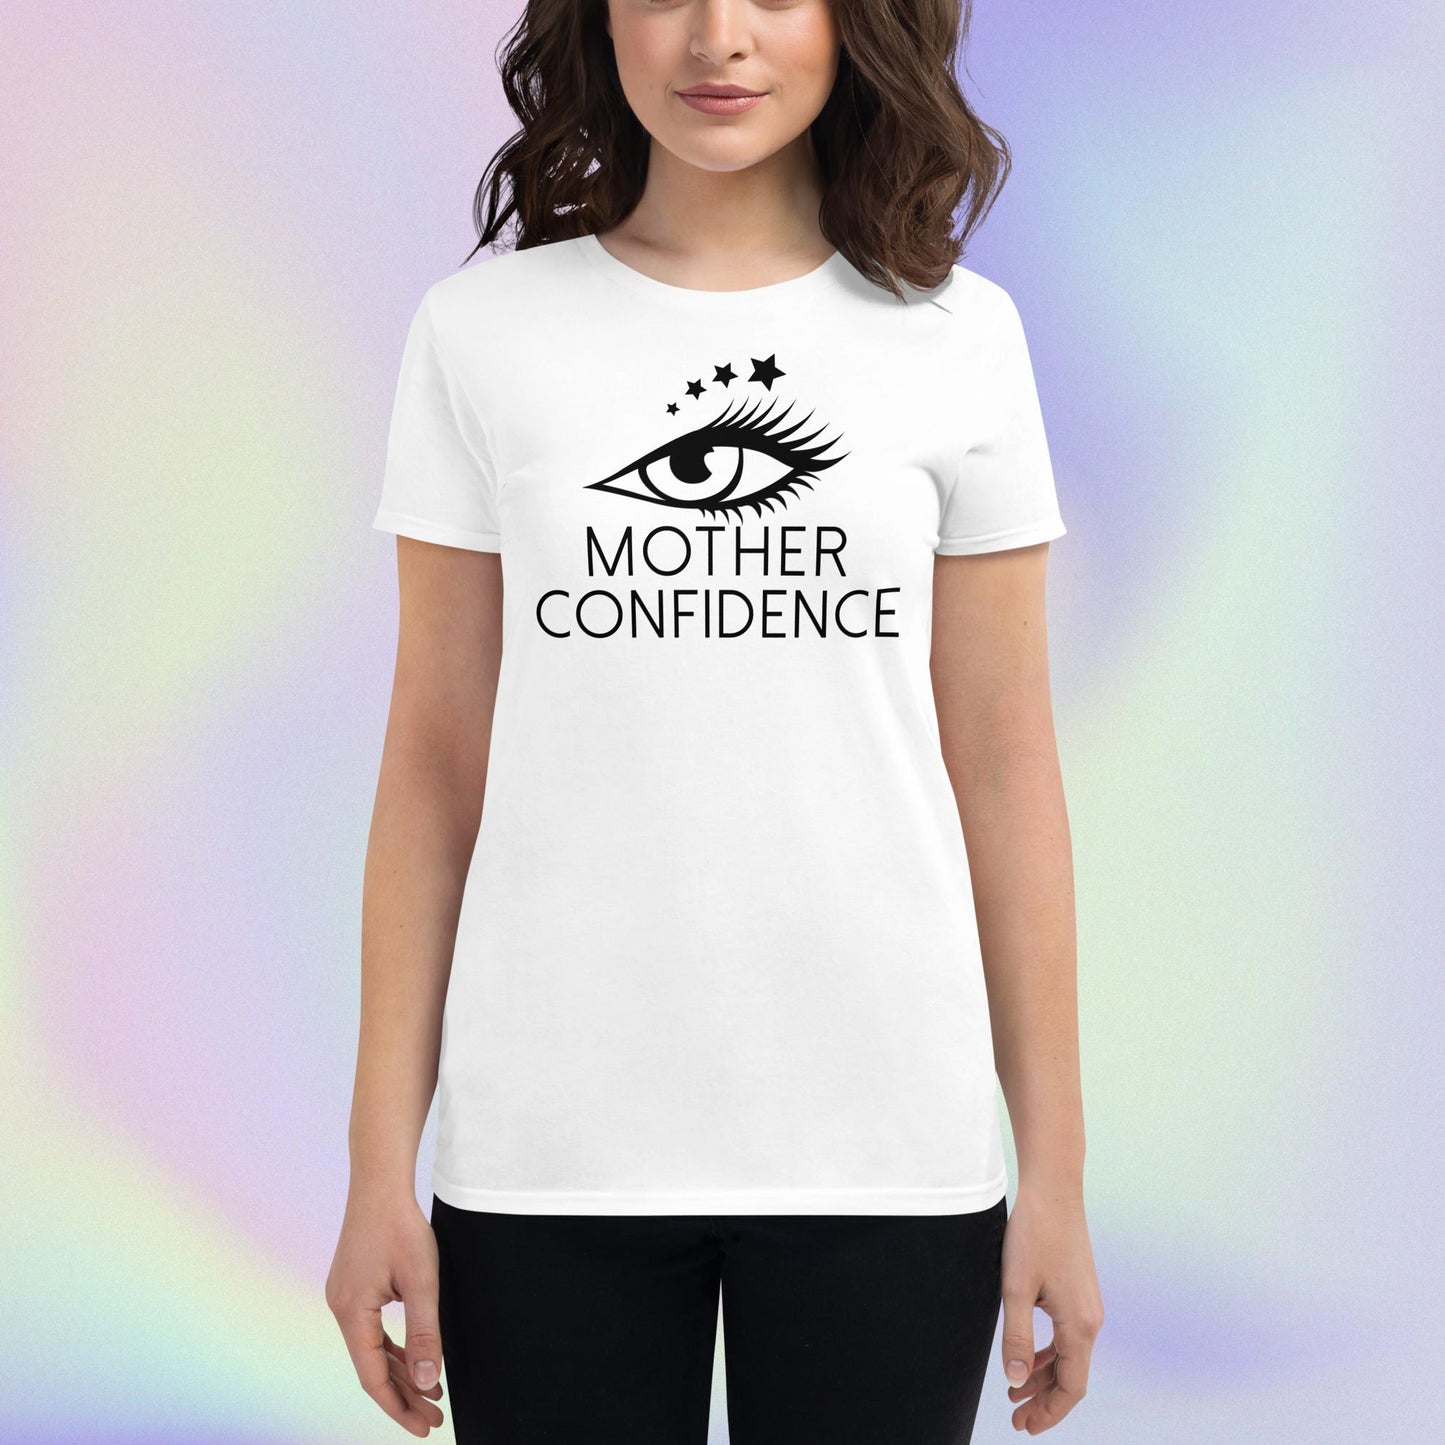 Celebration Mindset Exclusive: Mother Confidence. Women's short sleeve t-shirt